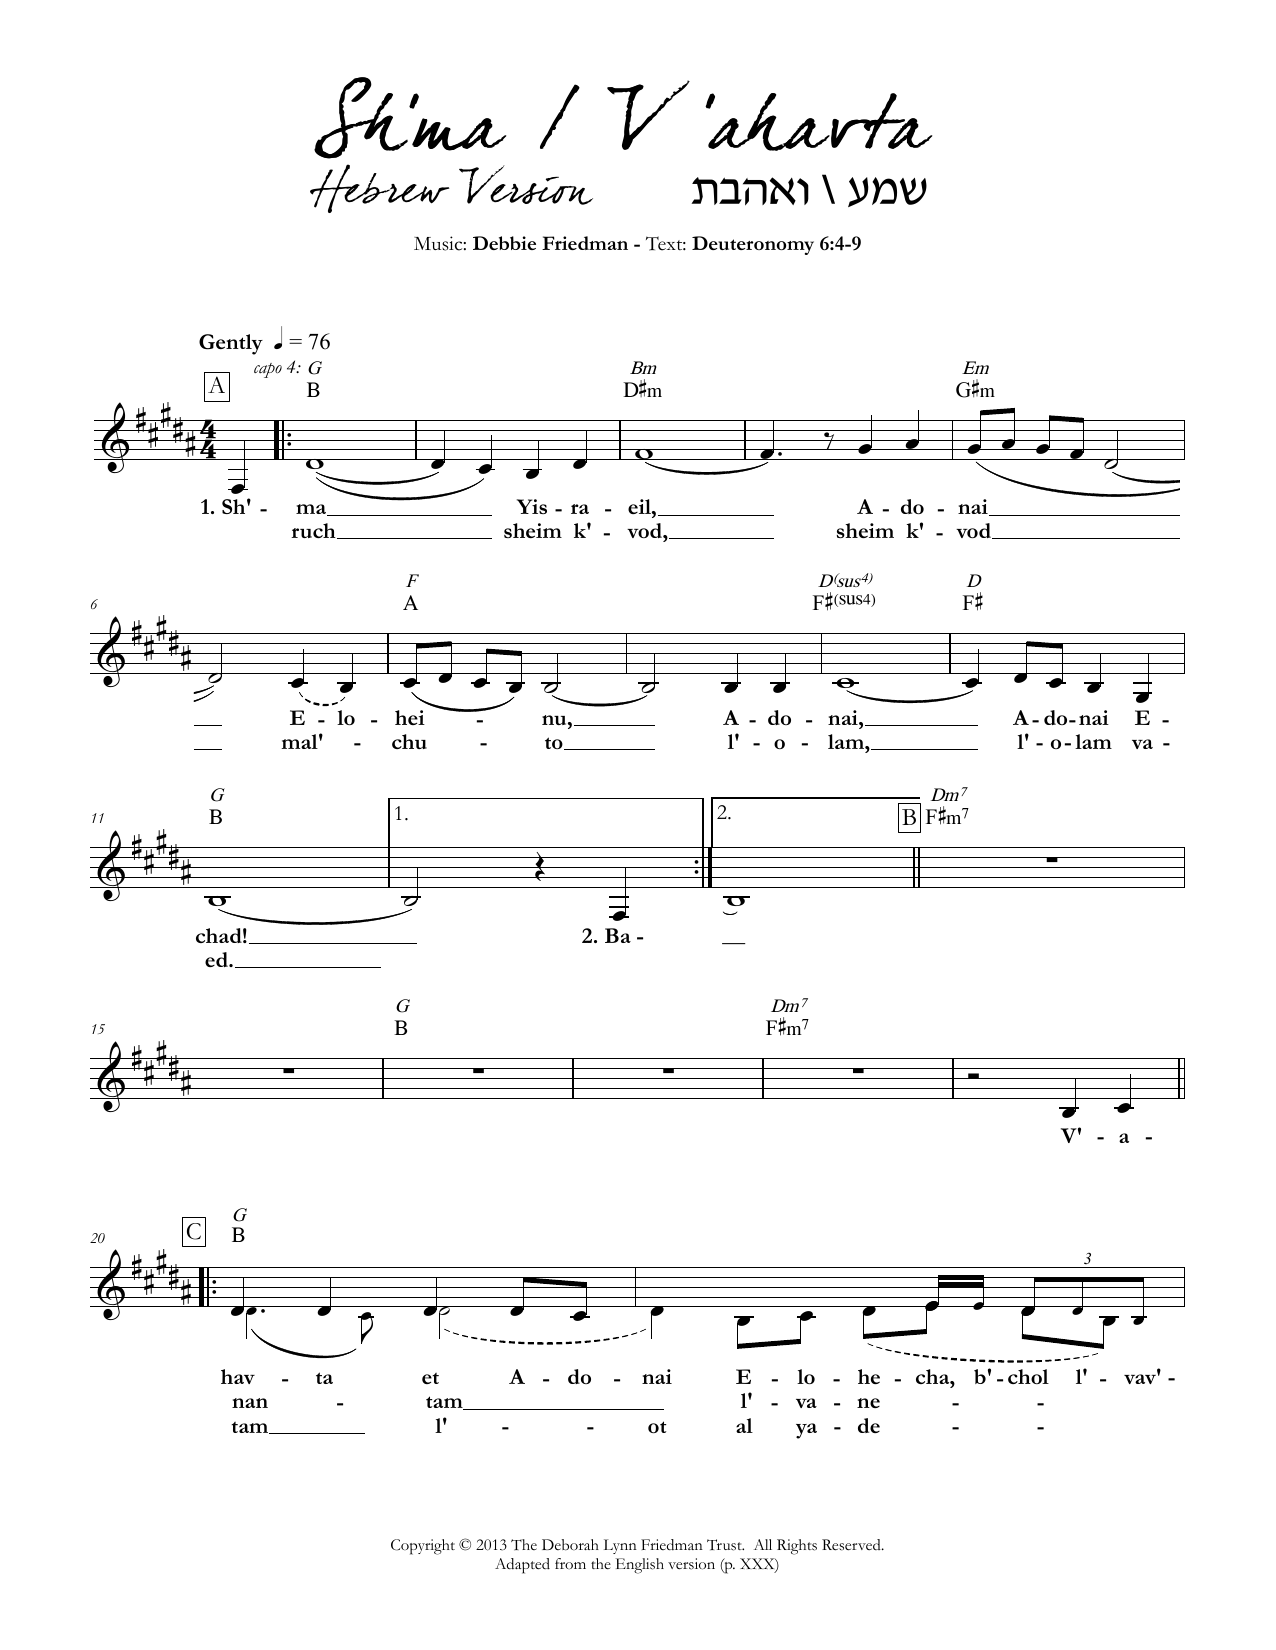 Debbie Friedman Sh'ma/V'ahavta (Hebrew version) Sheet Music Notes & Chords for Lead Sheet / Fake Book - Download or Print PDF